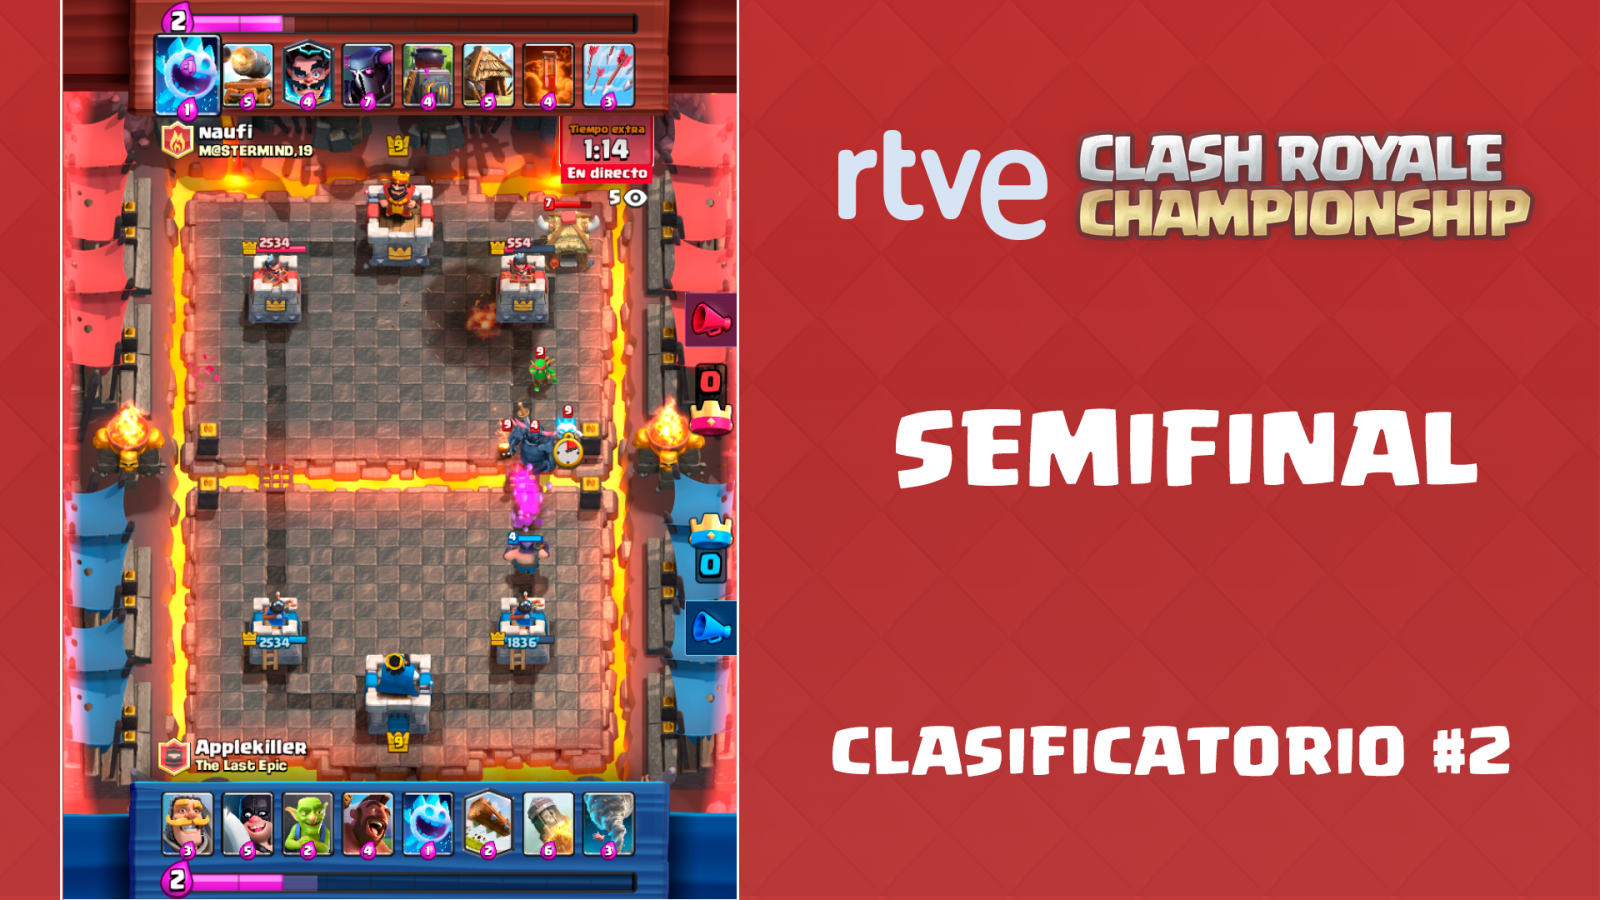 RTVE Clash Royale Championship. Clasificatorio #2 - Semifinal